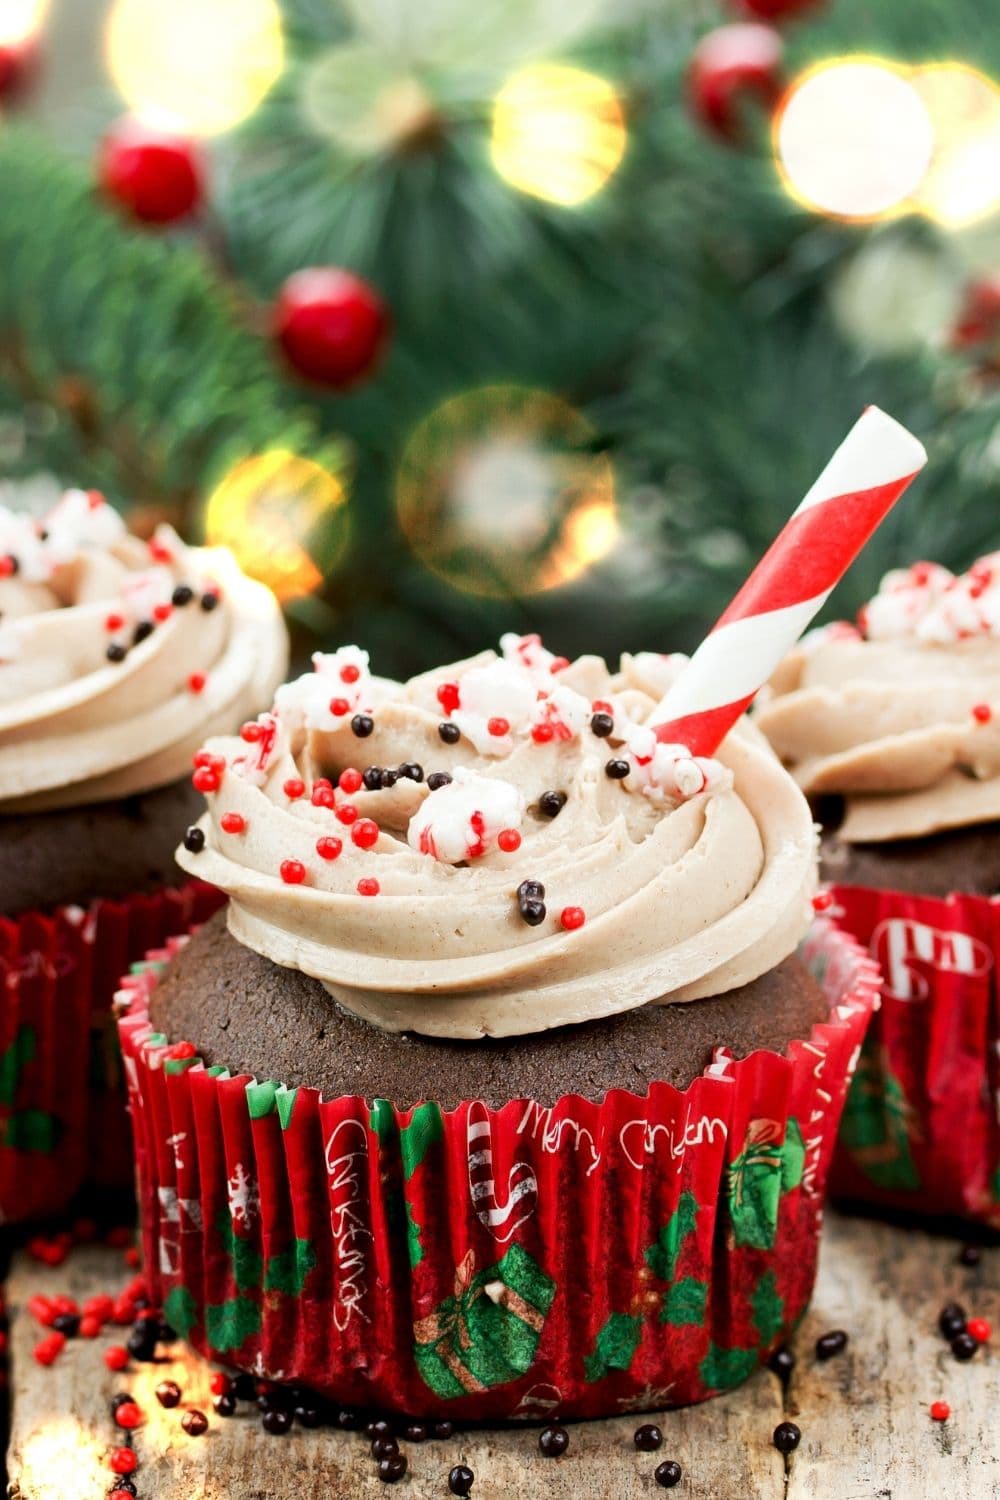 Chocolate Christmas Tree Cupcakes - Just a Taste